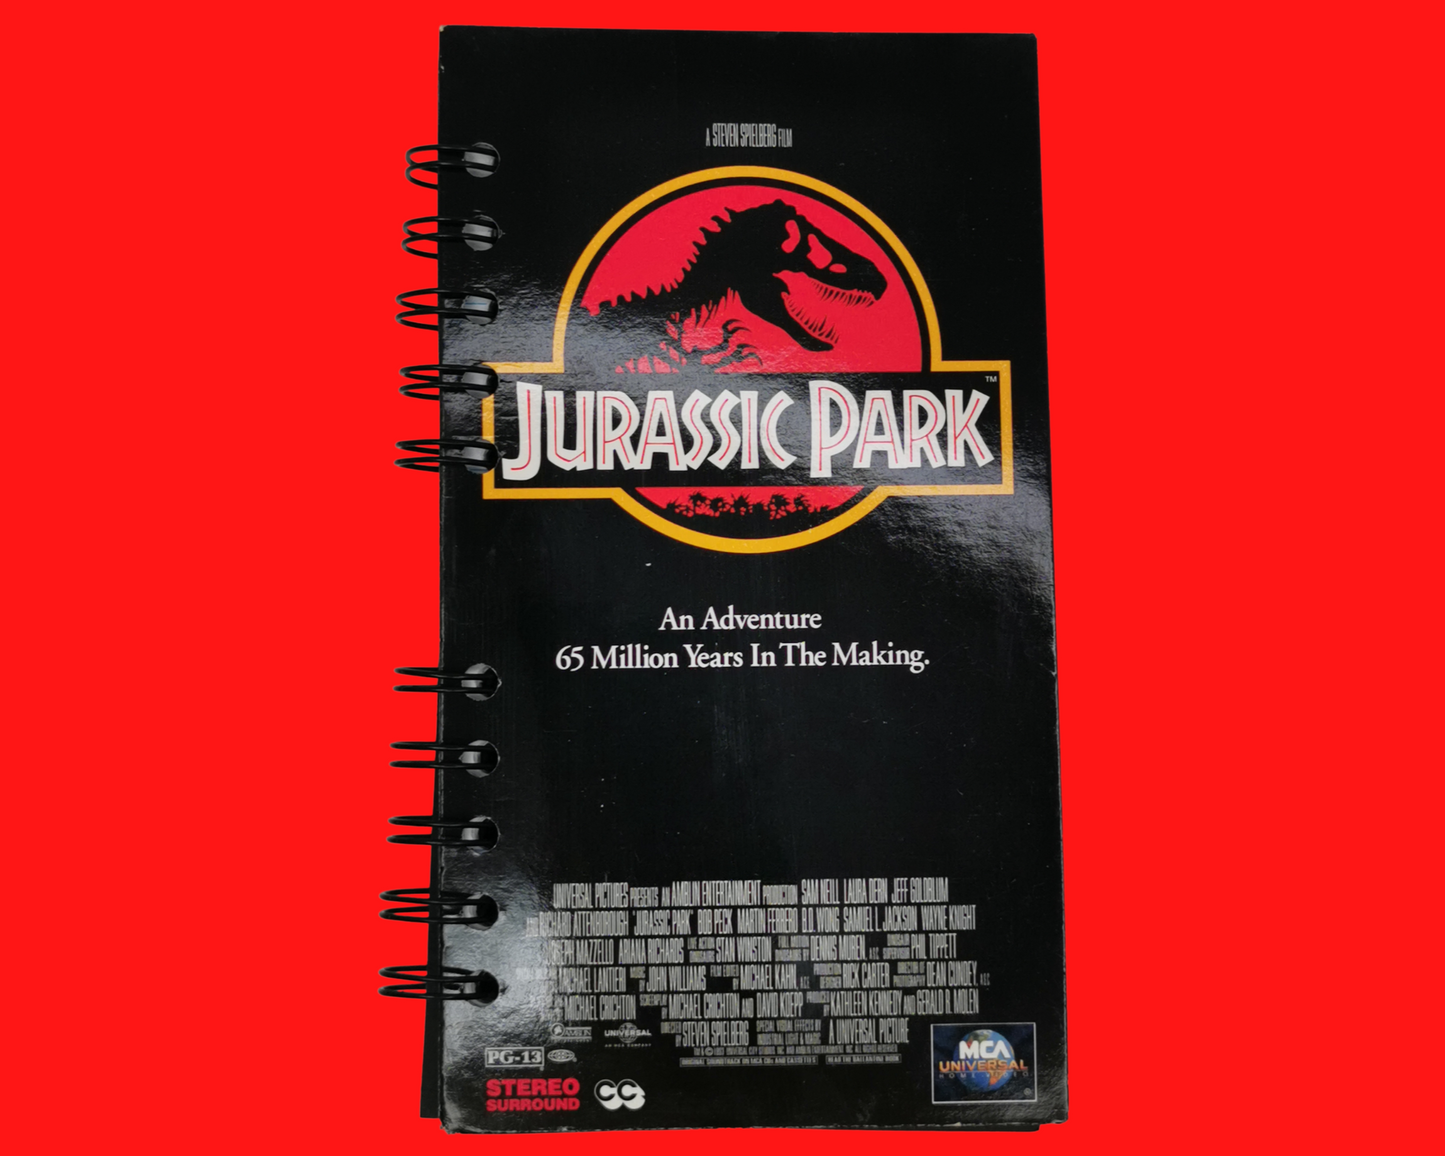 Carnet de film VHS Jurassic Park